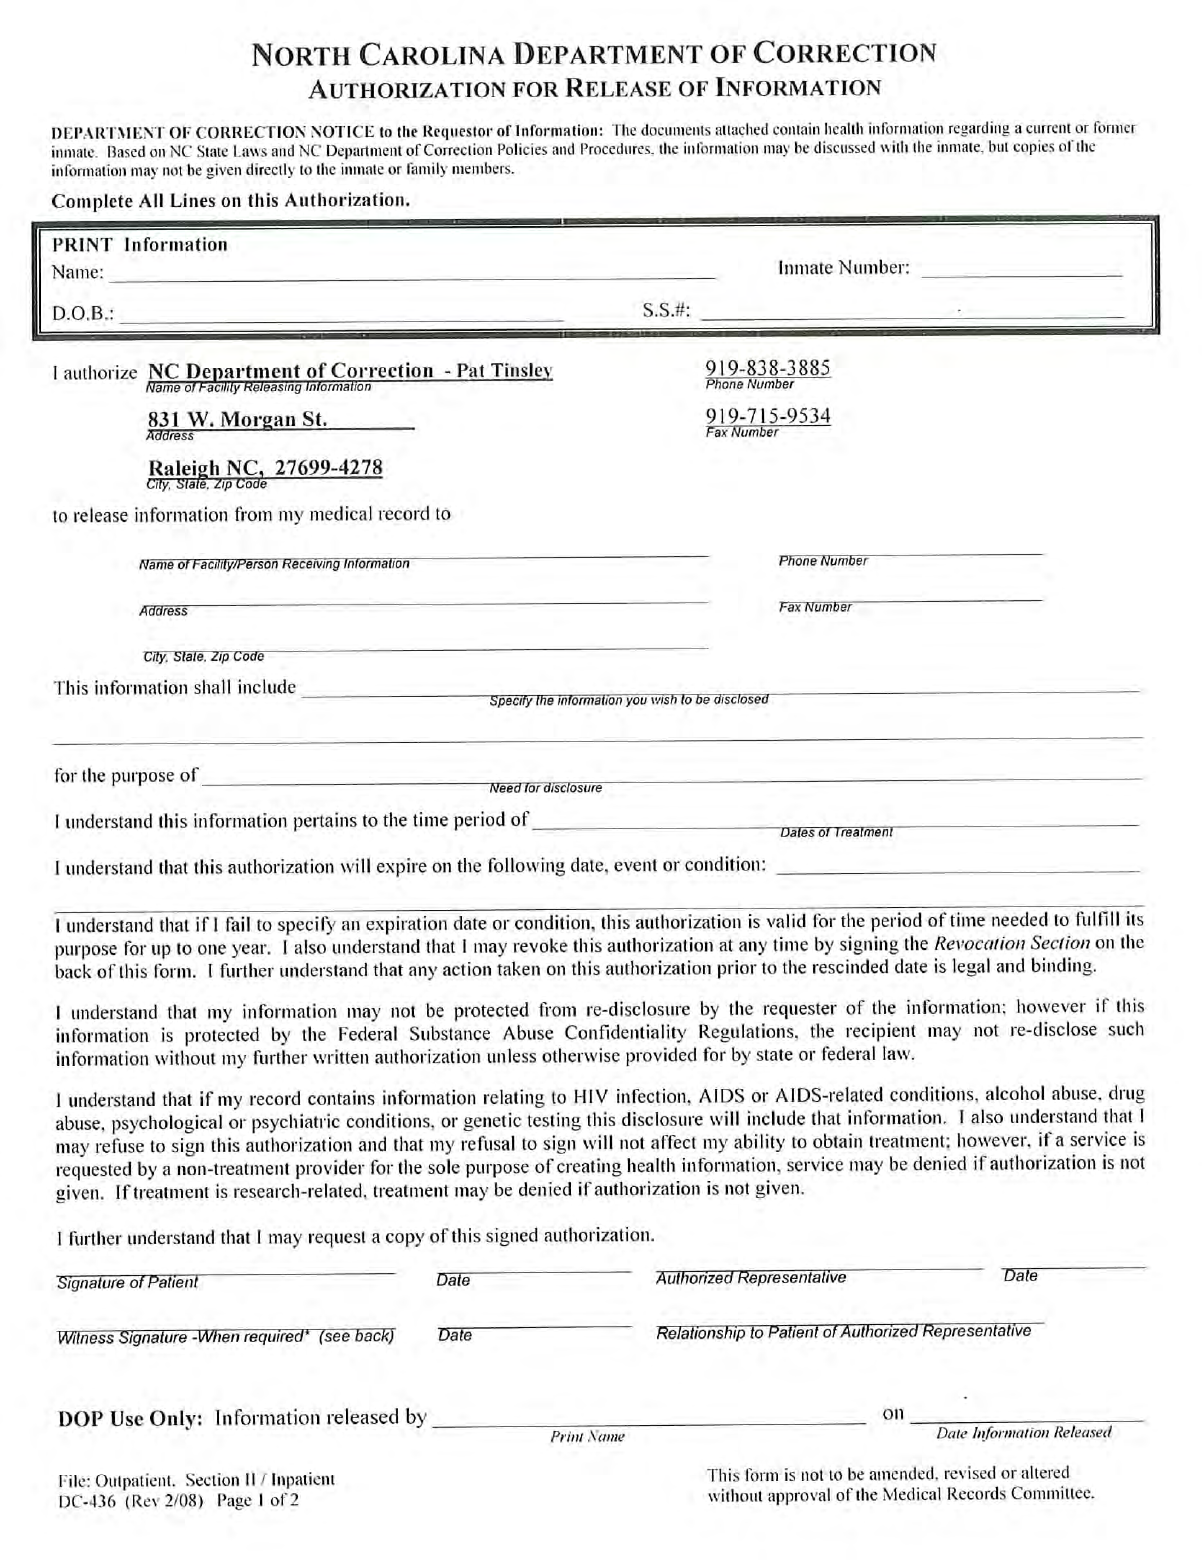 North Carolina Medical Records Release Form 1